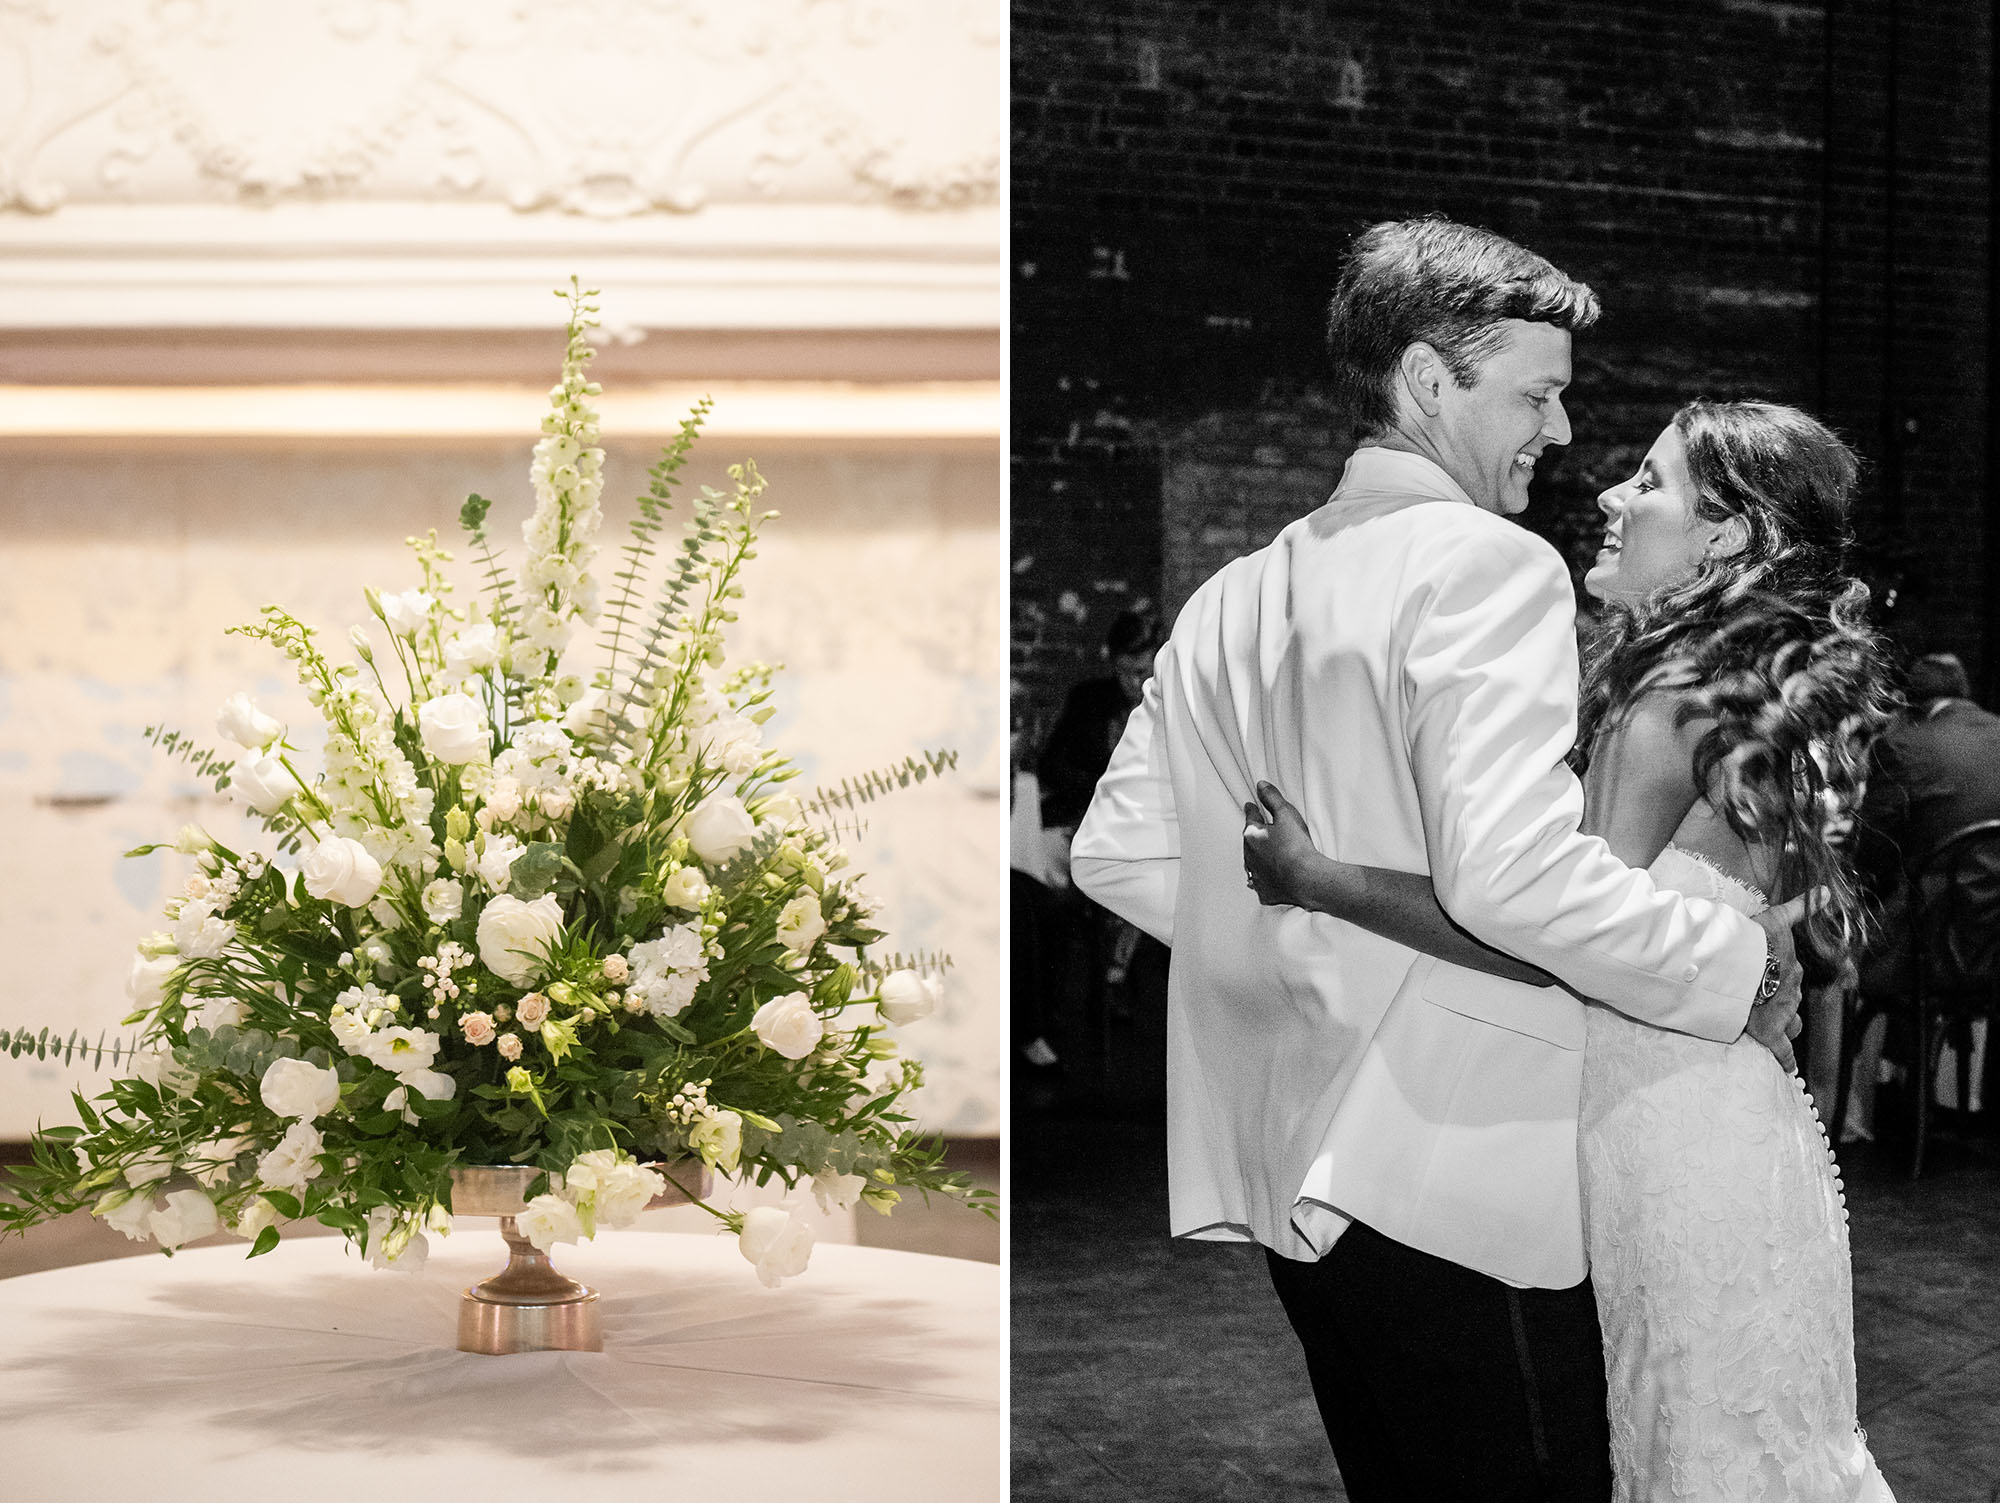 Floral arrangement; bride and groom at reception